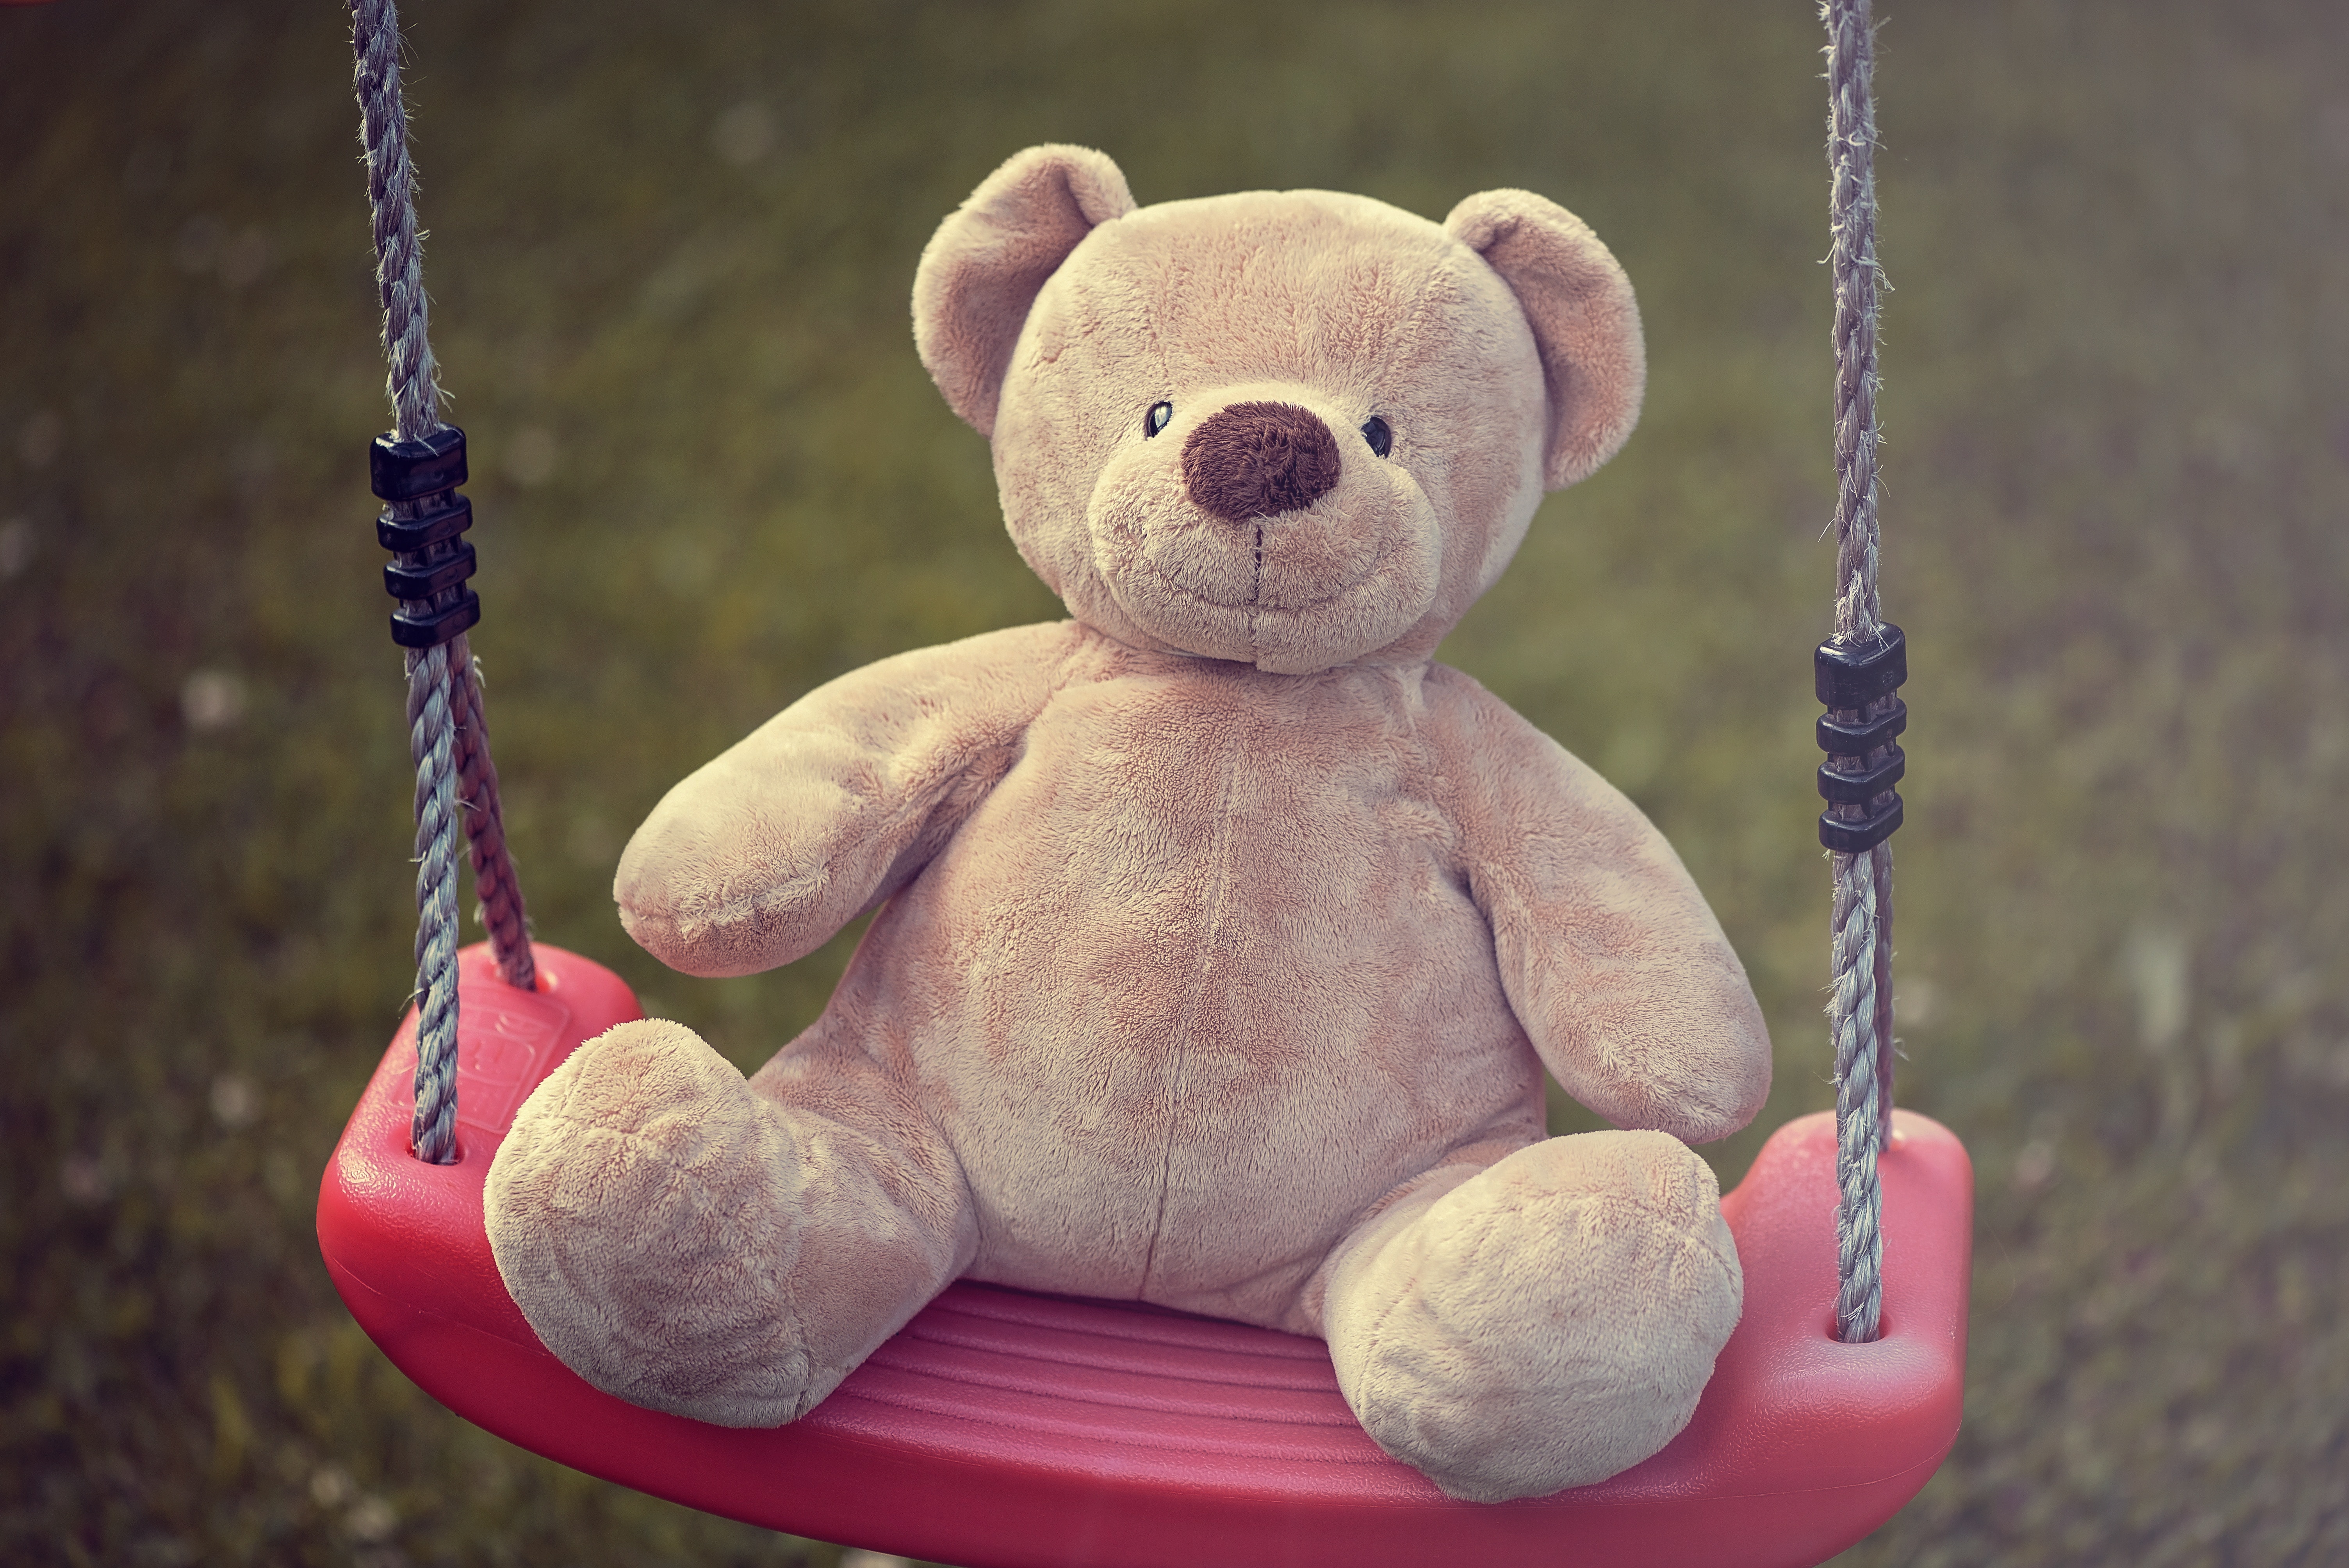 Bear, Stuffed Animal, Teddy, Teddy Bear, teddy bear, childhood